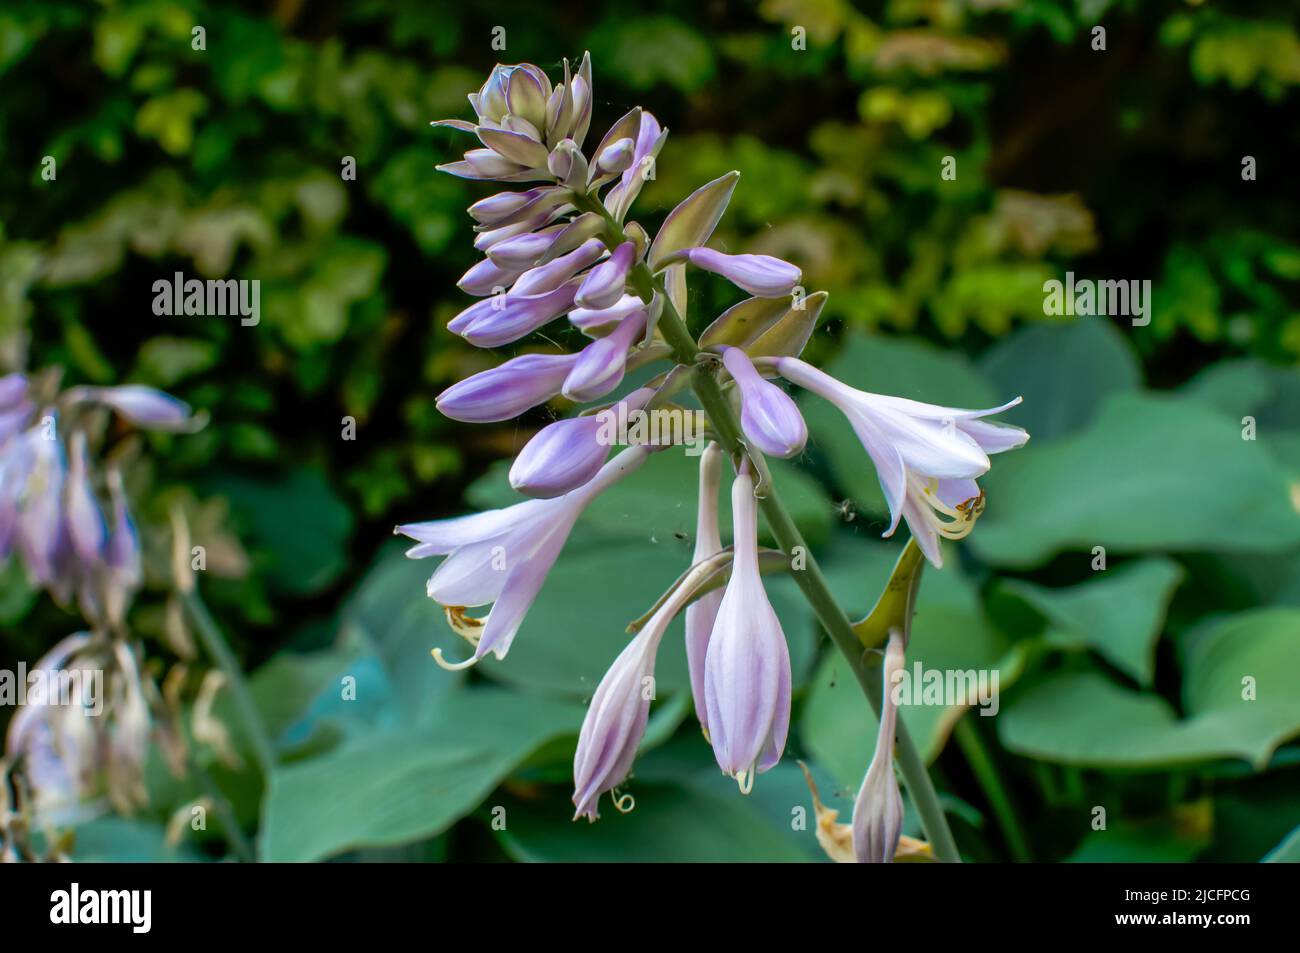 funkia, Hosta Tratt, lilac-colored flower, at close range Stock Photo